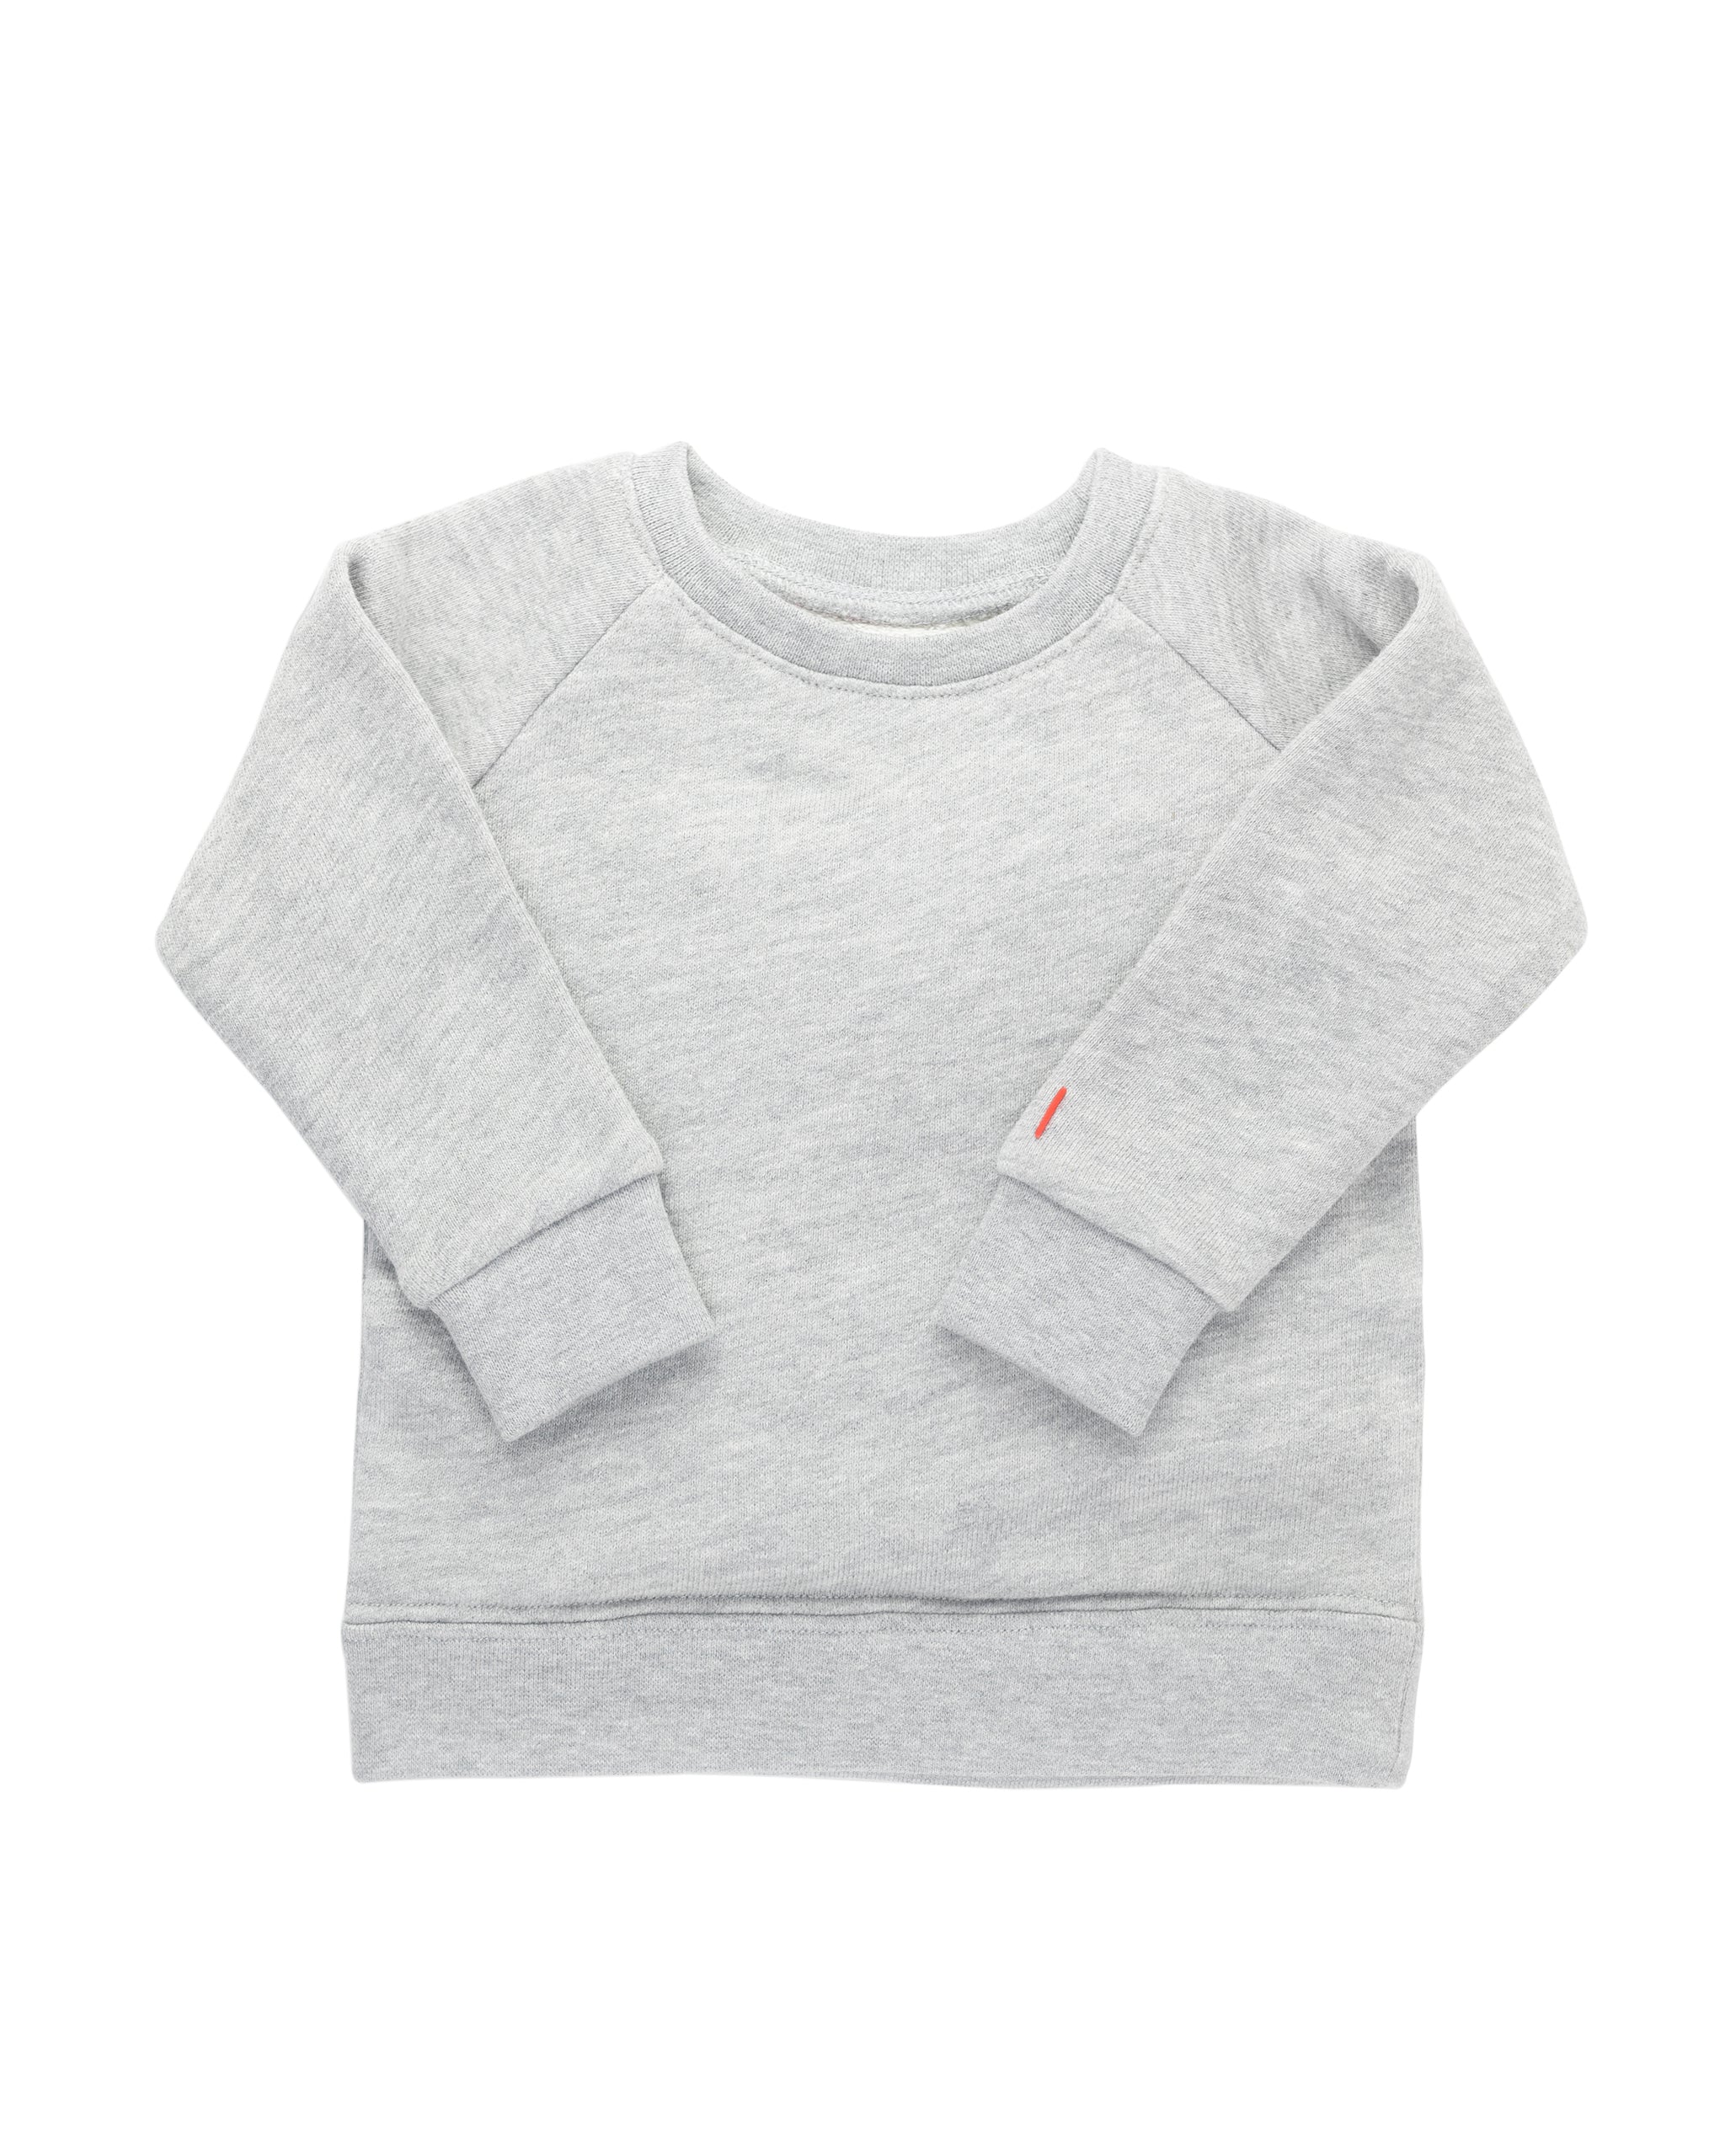 The Organic Pullover Sweatshirt [Light Heather Grey]